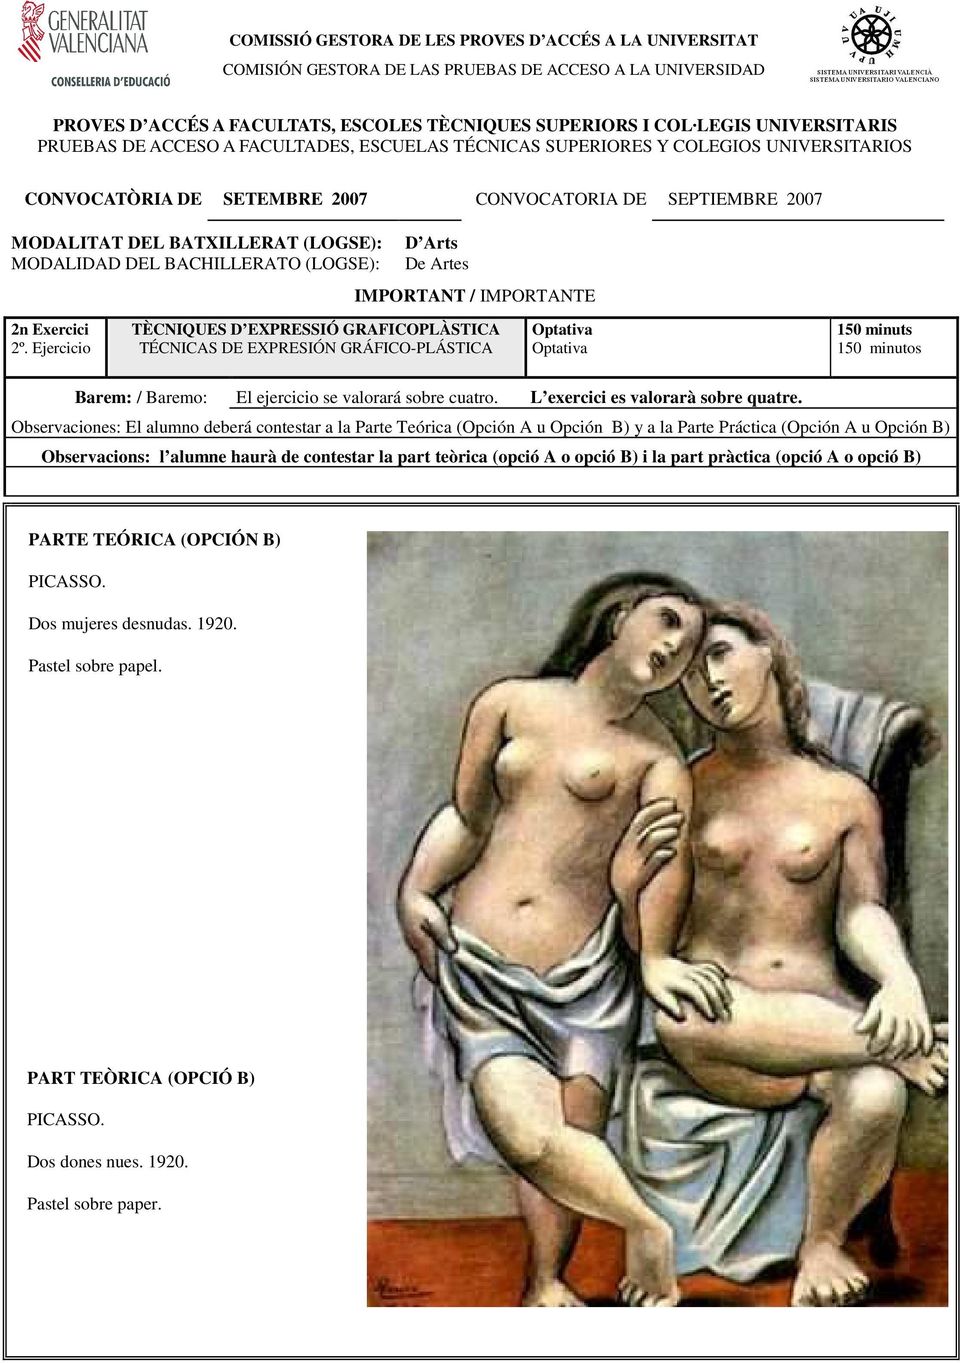 PARTE TEÓRICA (OPCIÓN B) PICASSO. Dos mujeres desnudas. 1920.